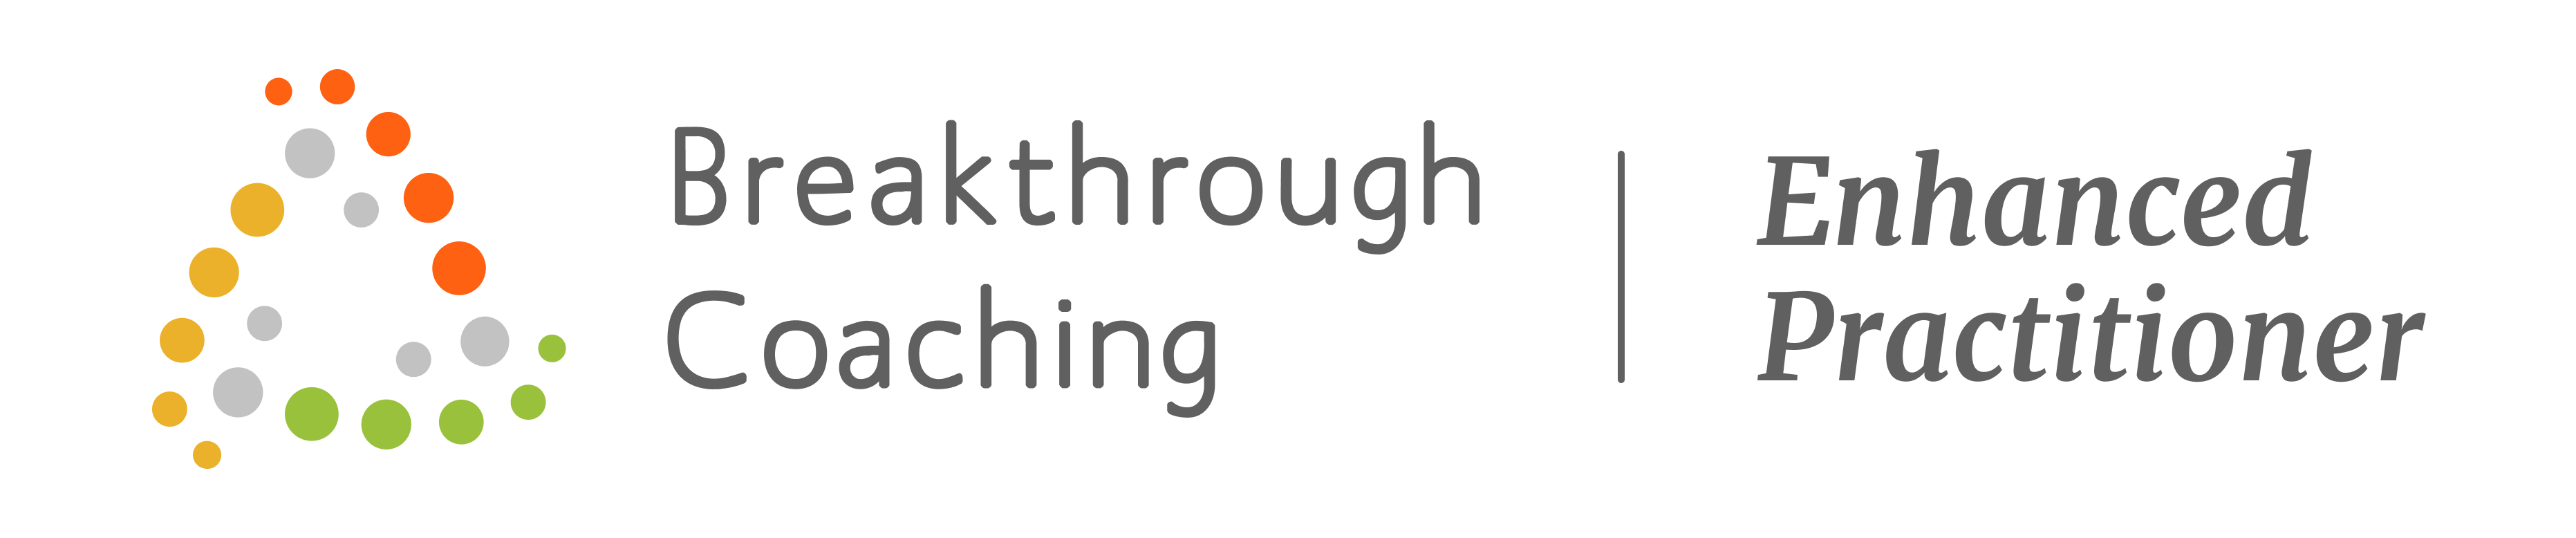 Breakthrough Coaching Enhanced Practitioner